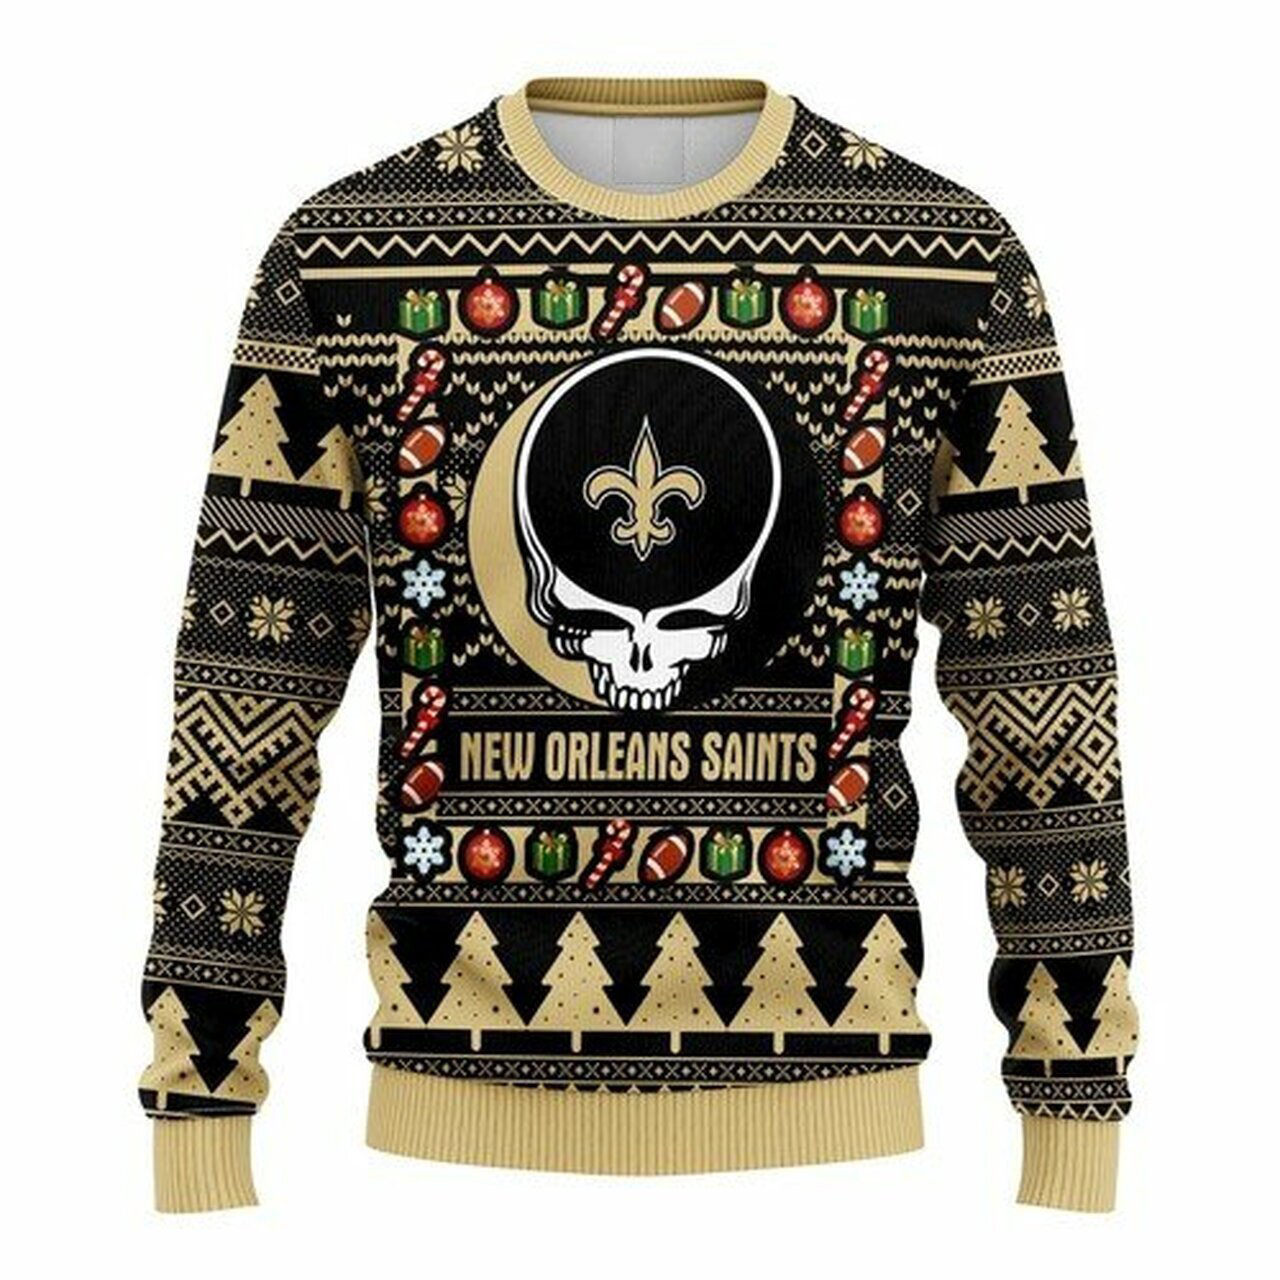 NFL New Orleans Saints Grateful Dead ugly christmas sweater